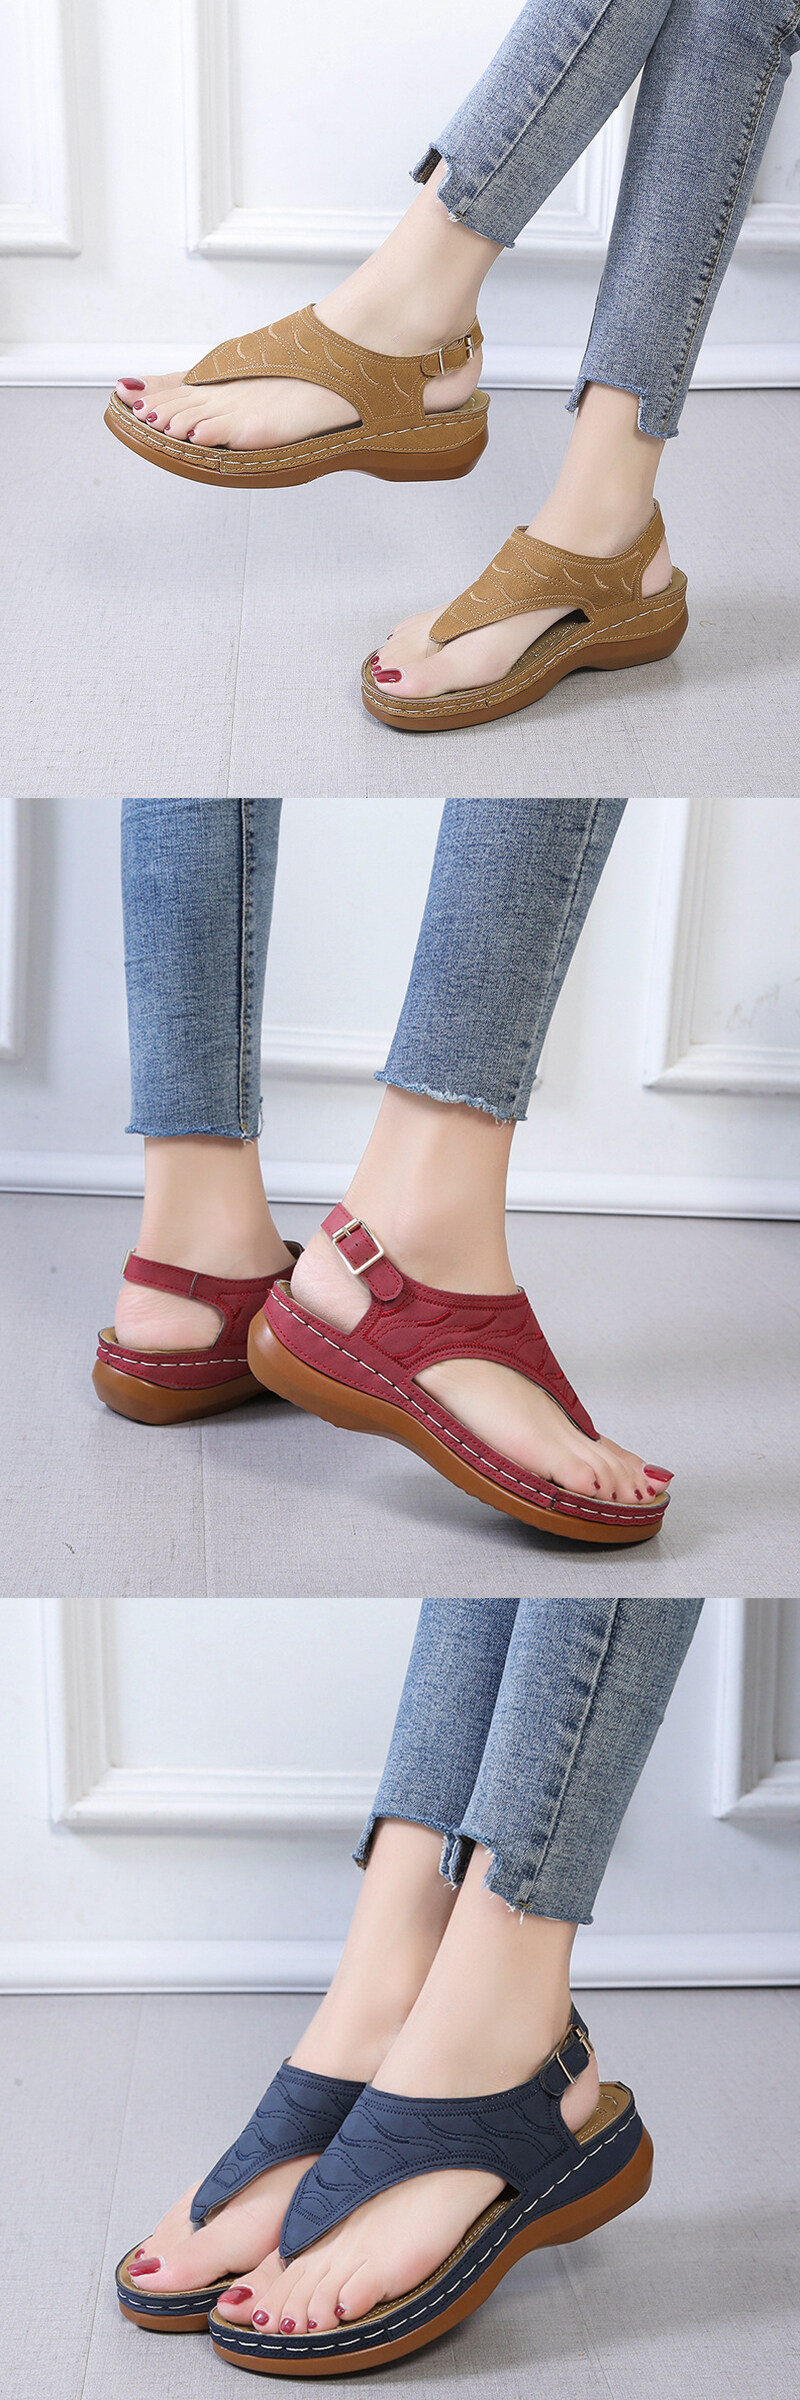 Buy Flat Half Shoes Sandals For Women On Sale online | Lazada.com.ph